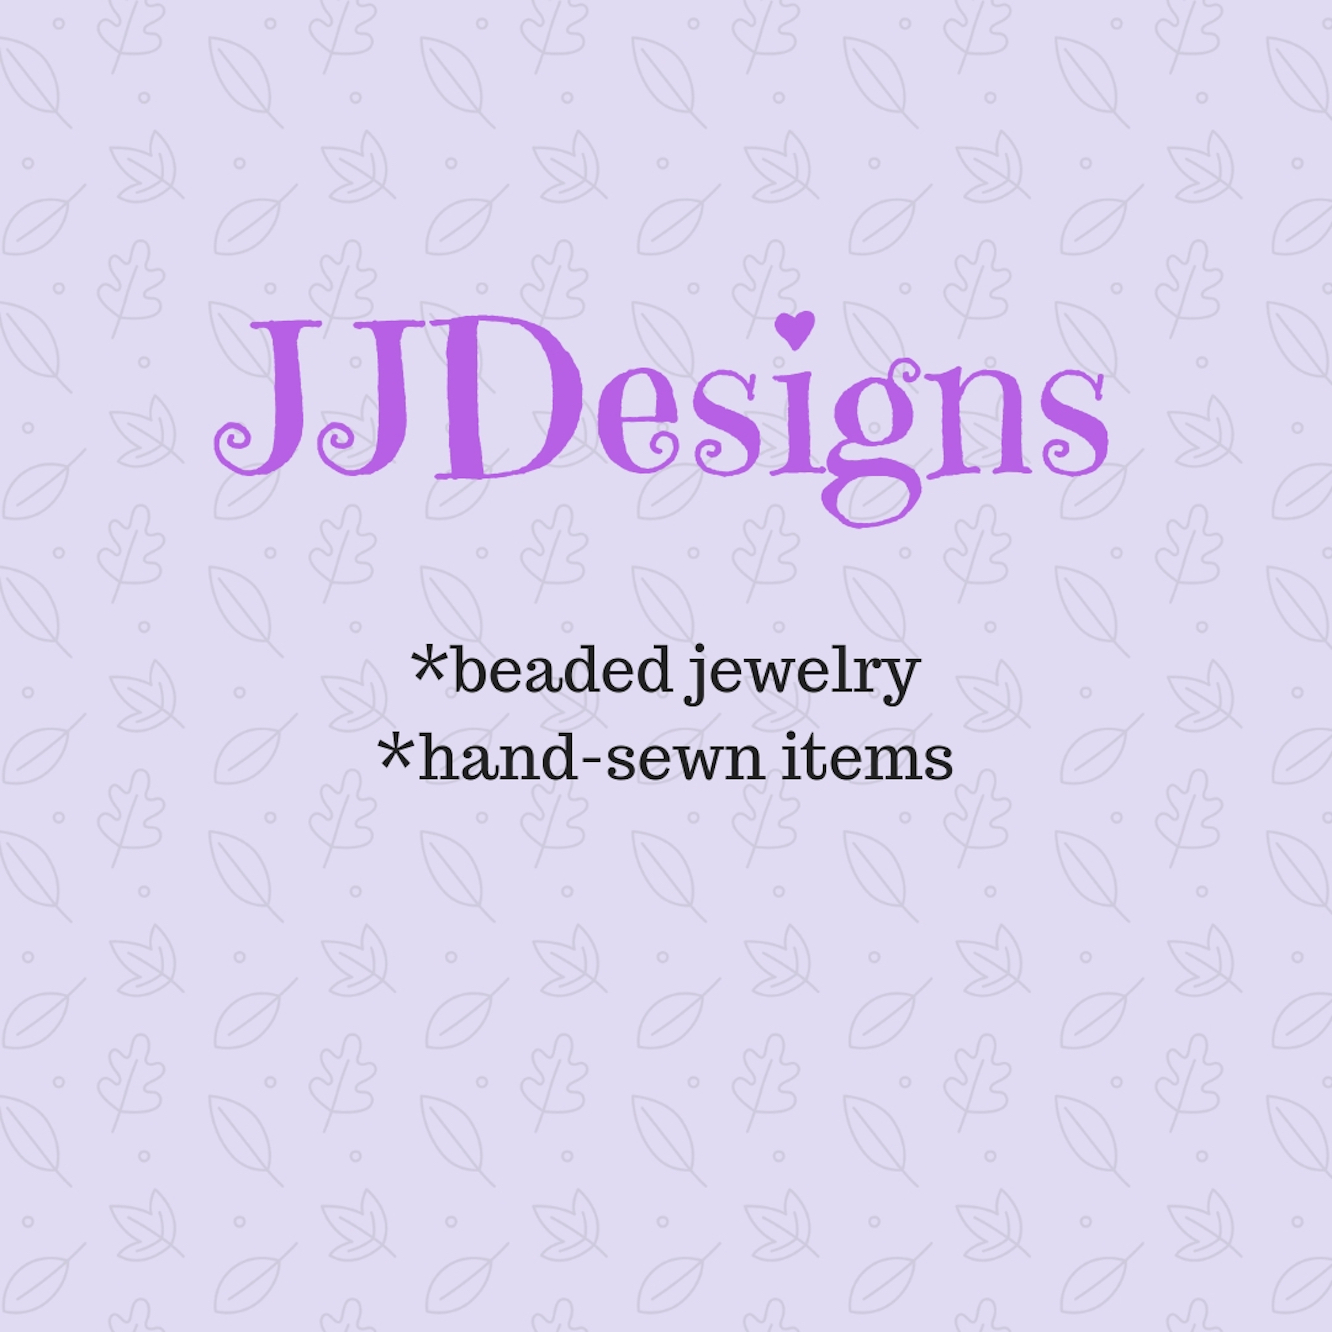 JJ Designs